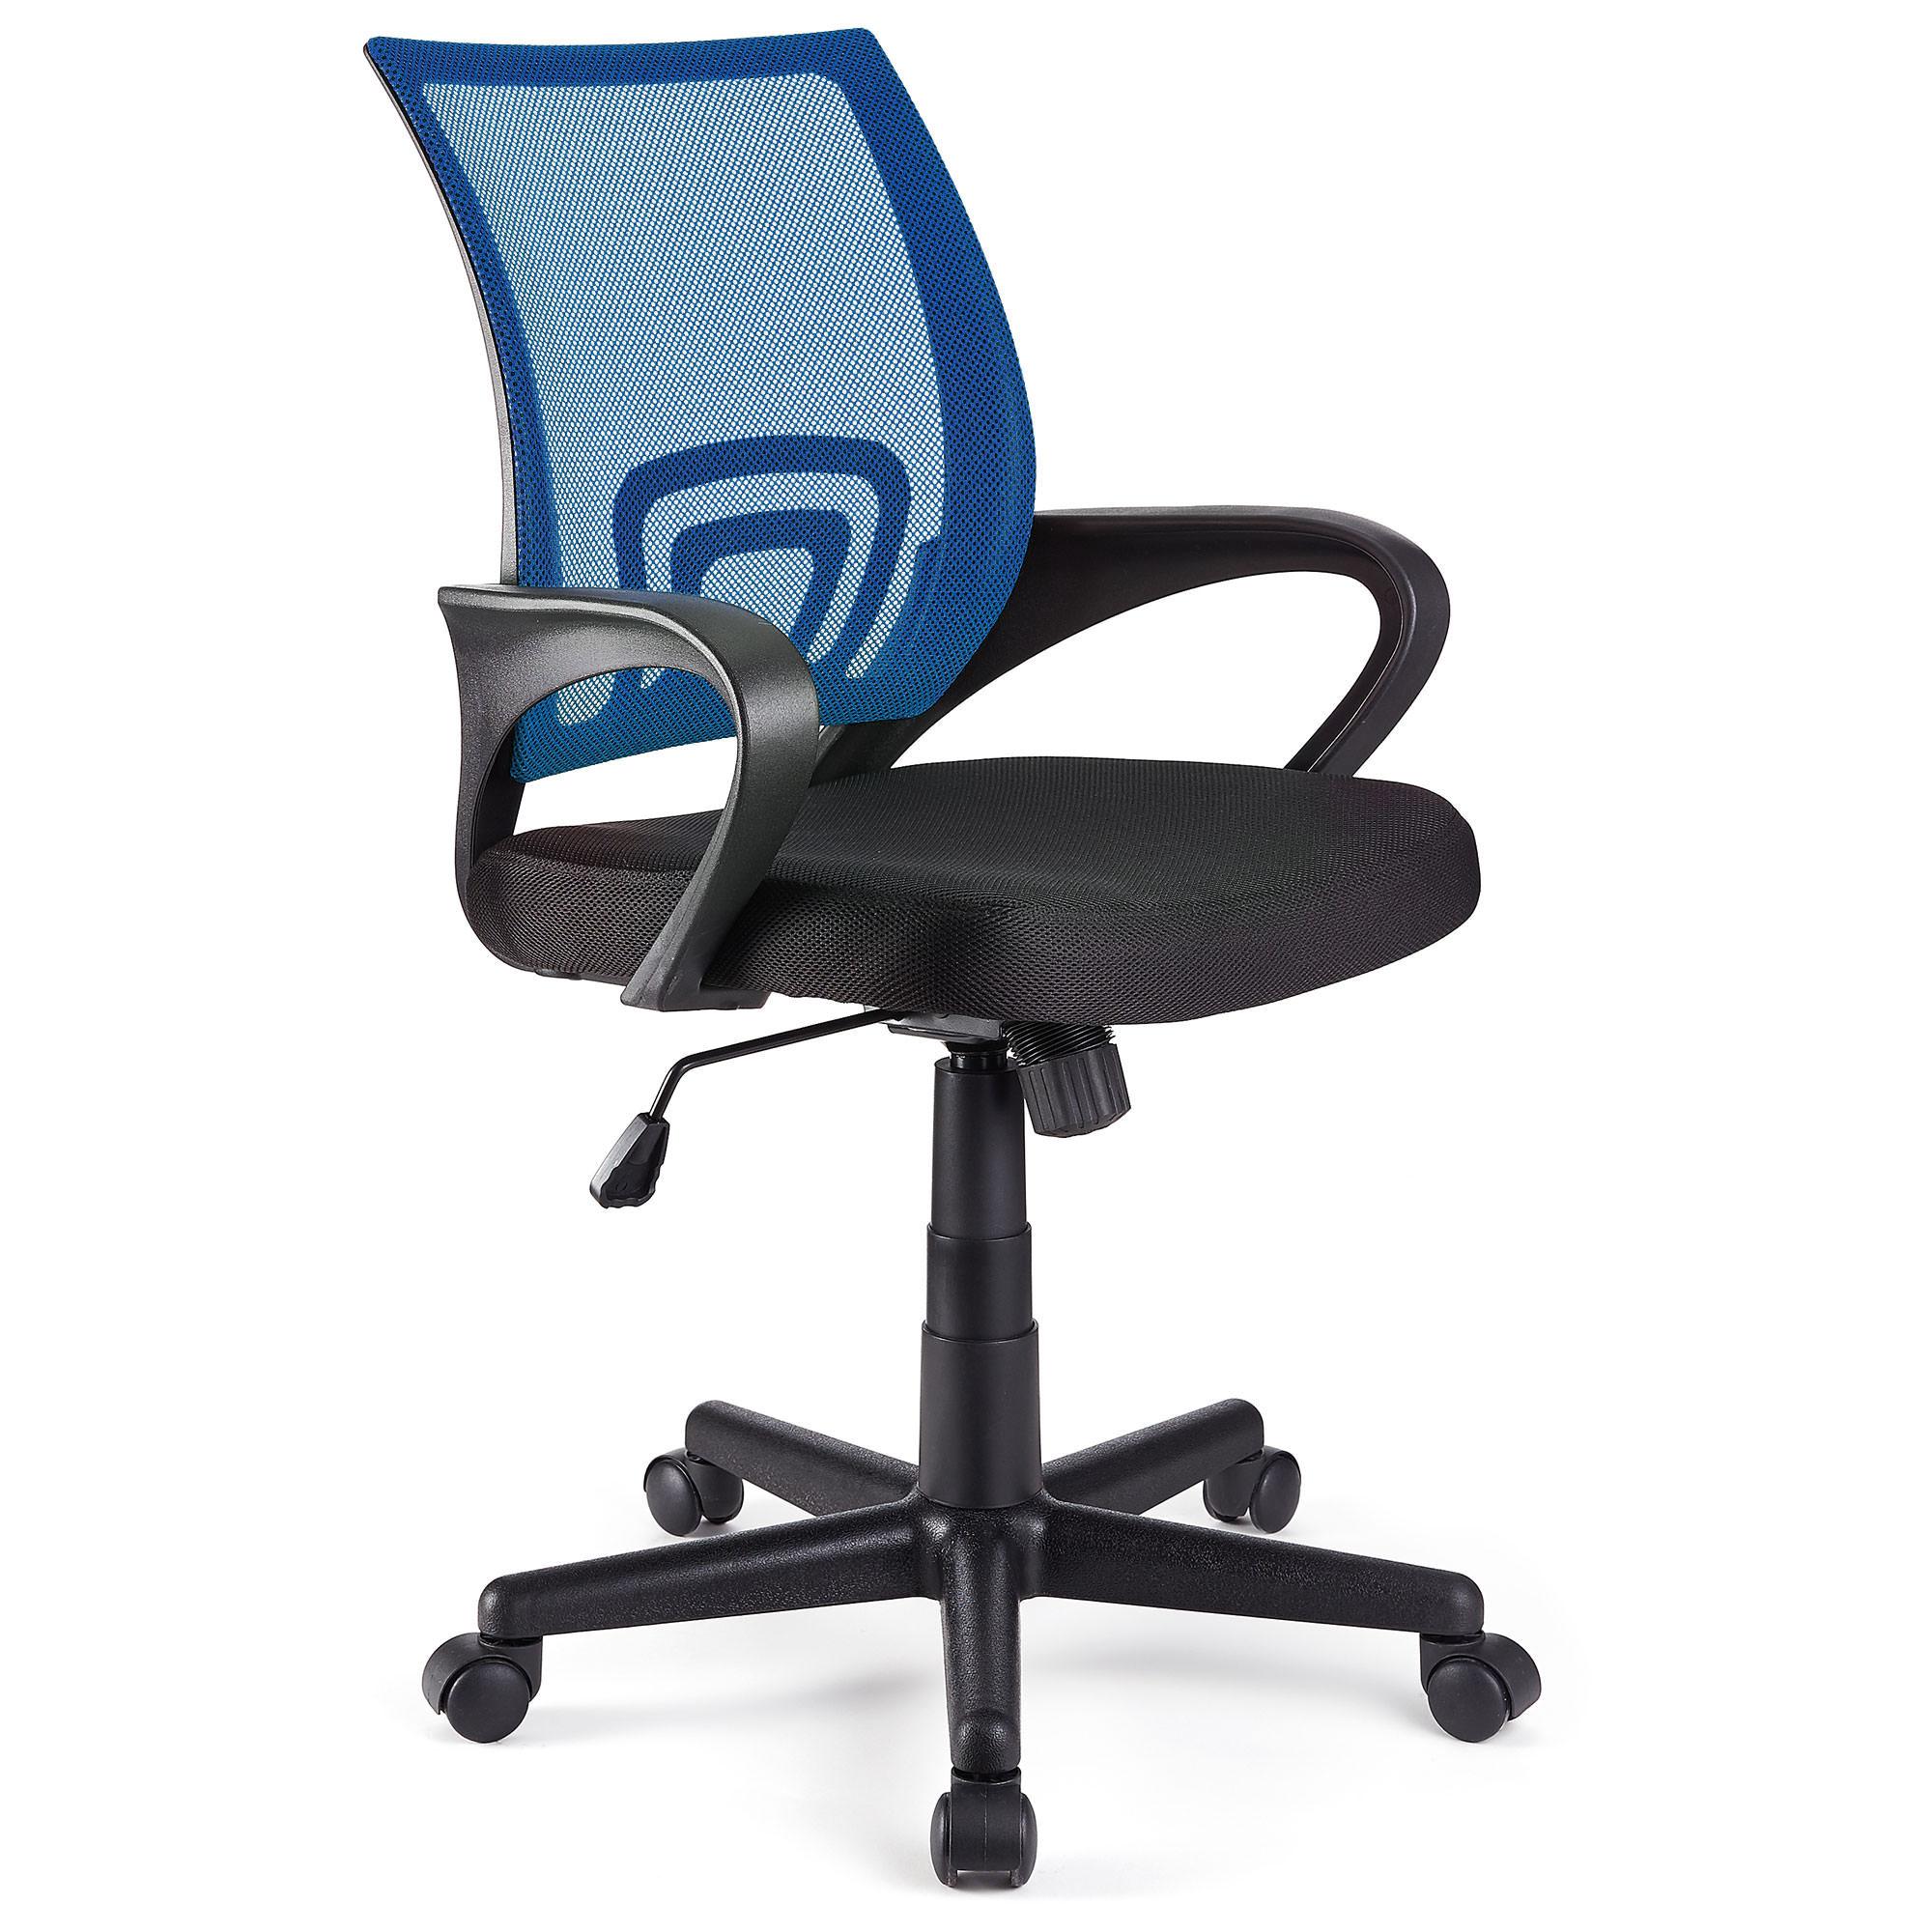 Cadeira de Escritório SEUL, Design Atractivo, Assento Acolchoado, Cor Azul